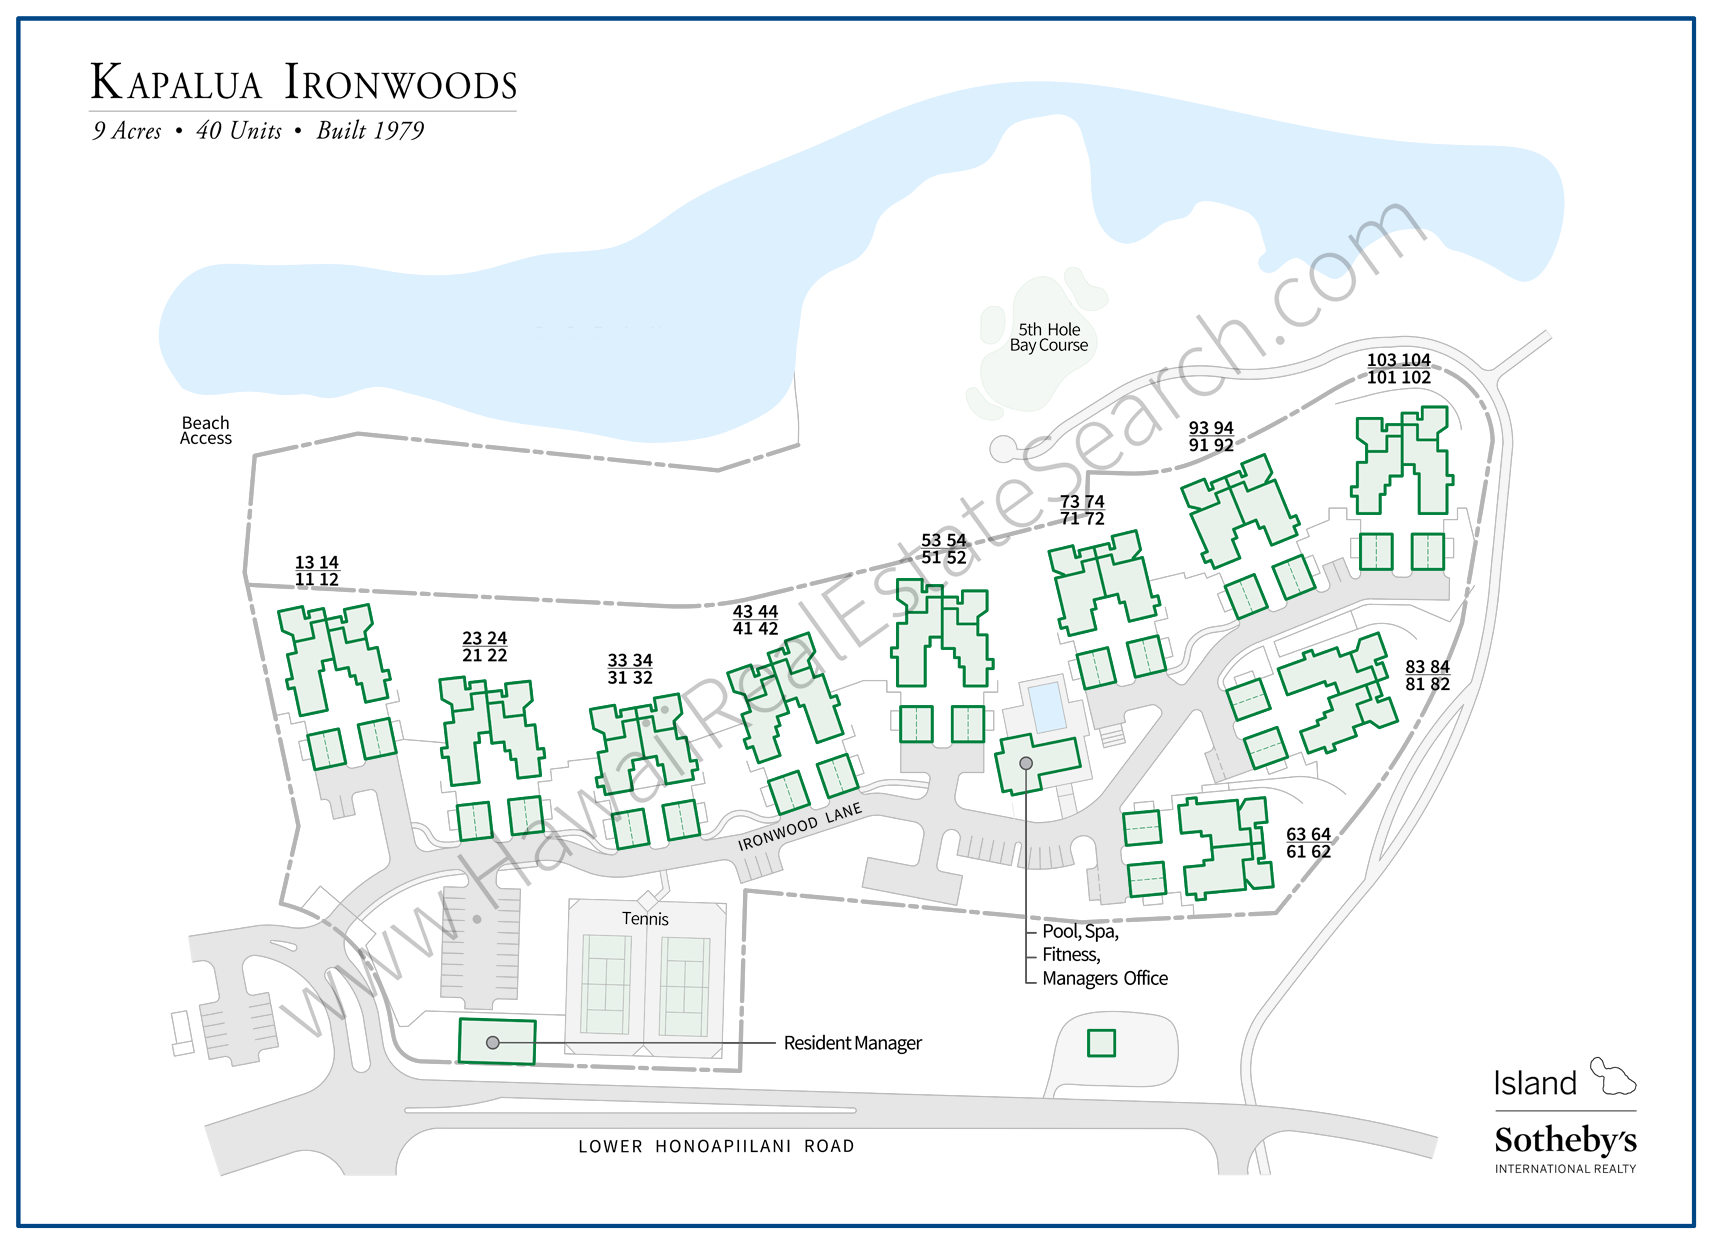 kapalua ironwoods map